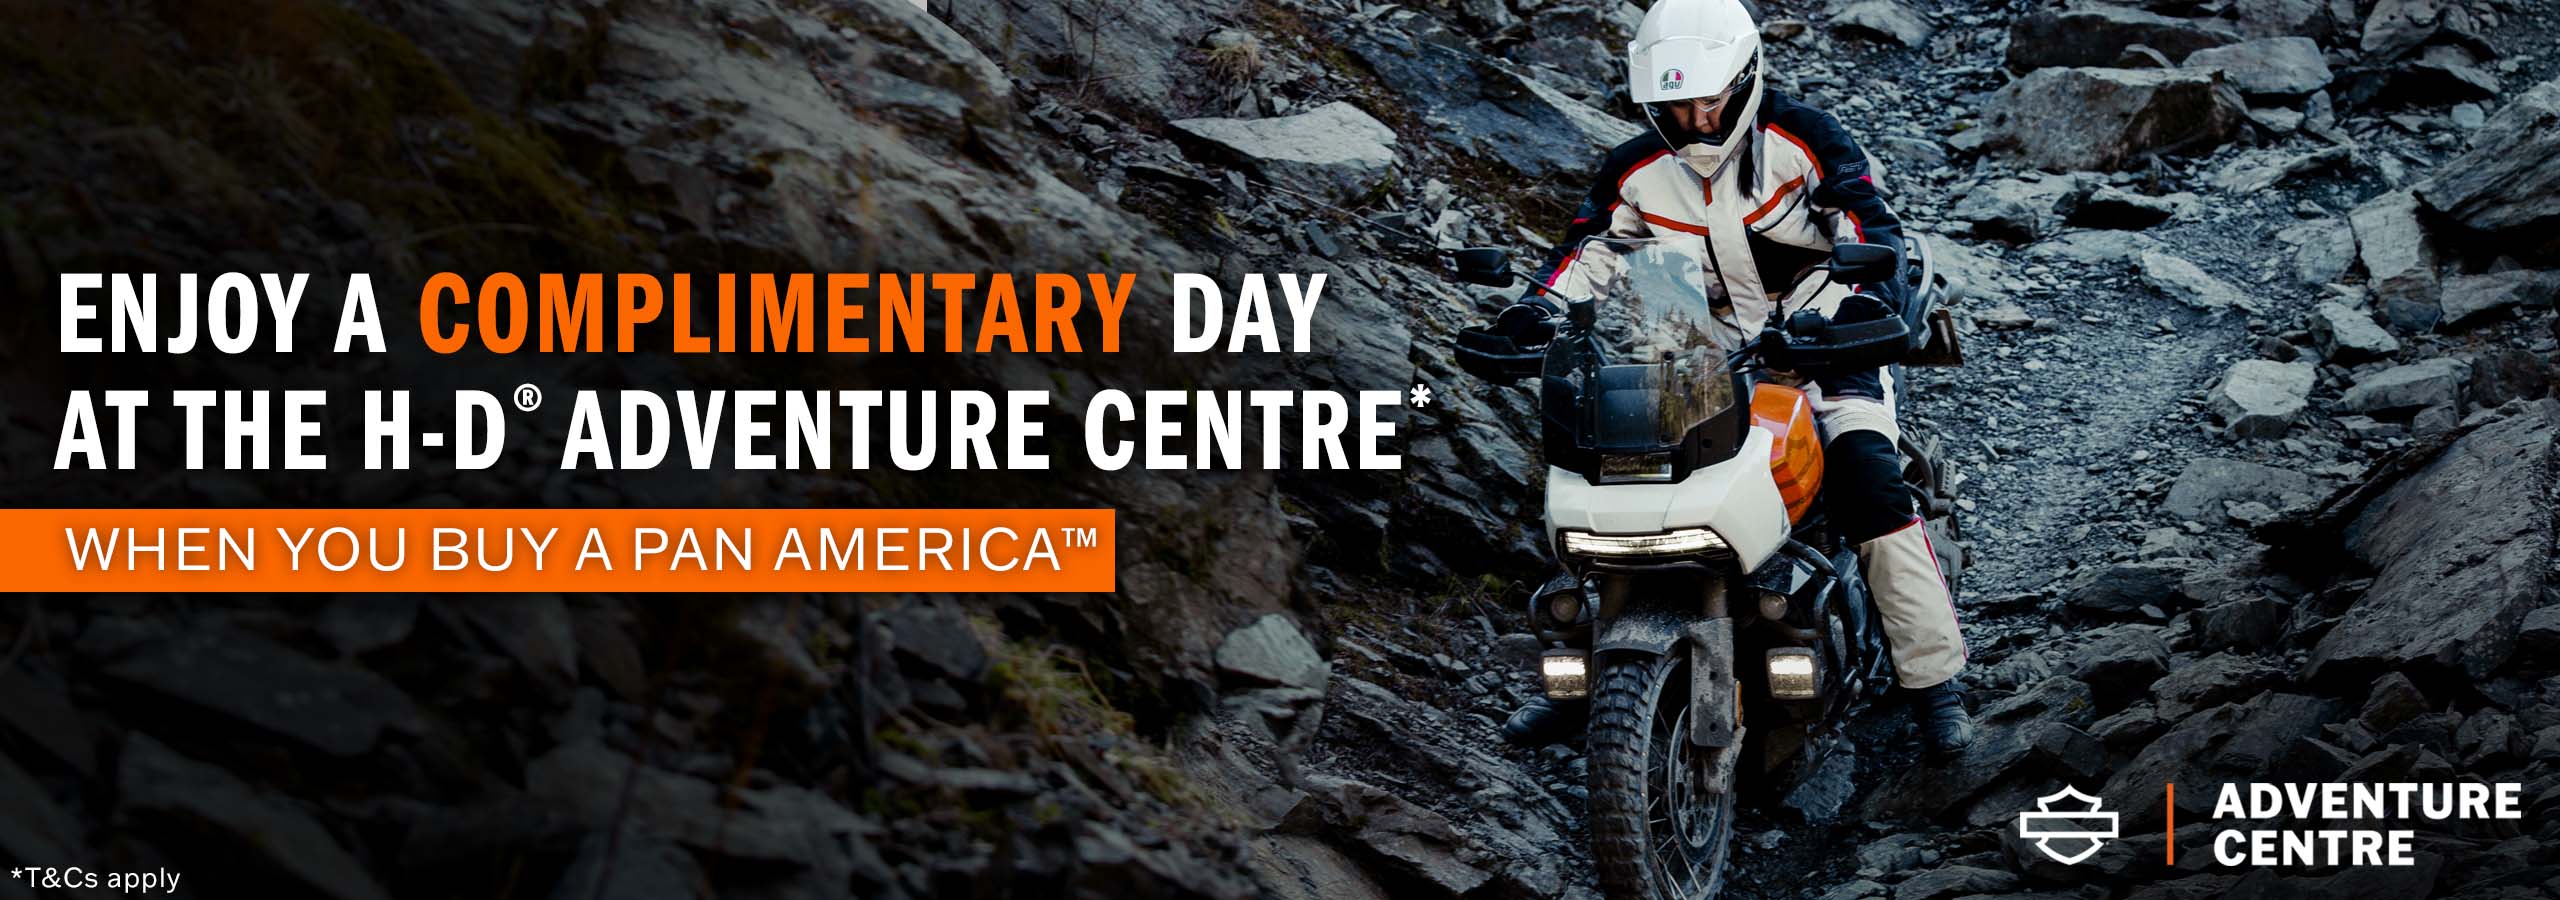 Harley-Davidson Pan America Adventure Centre Offer